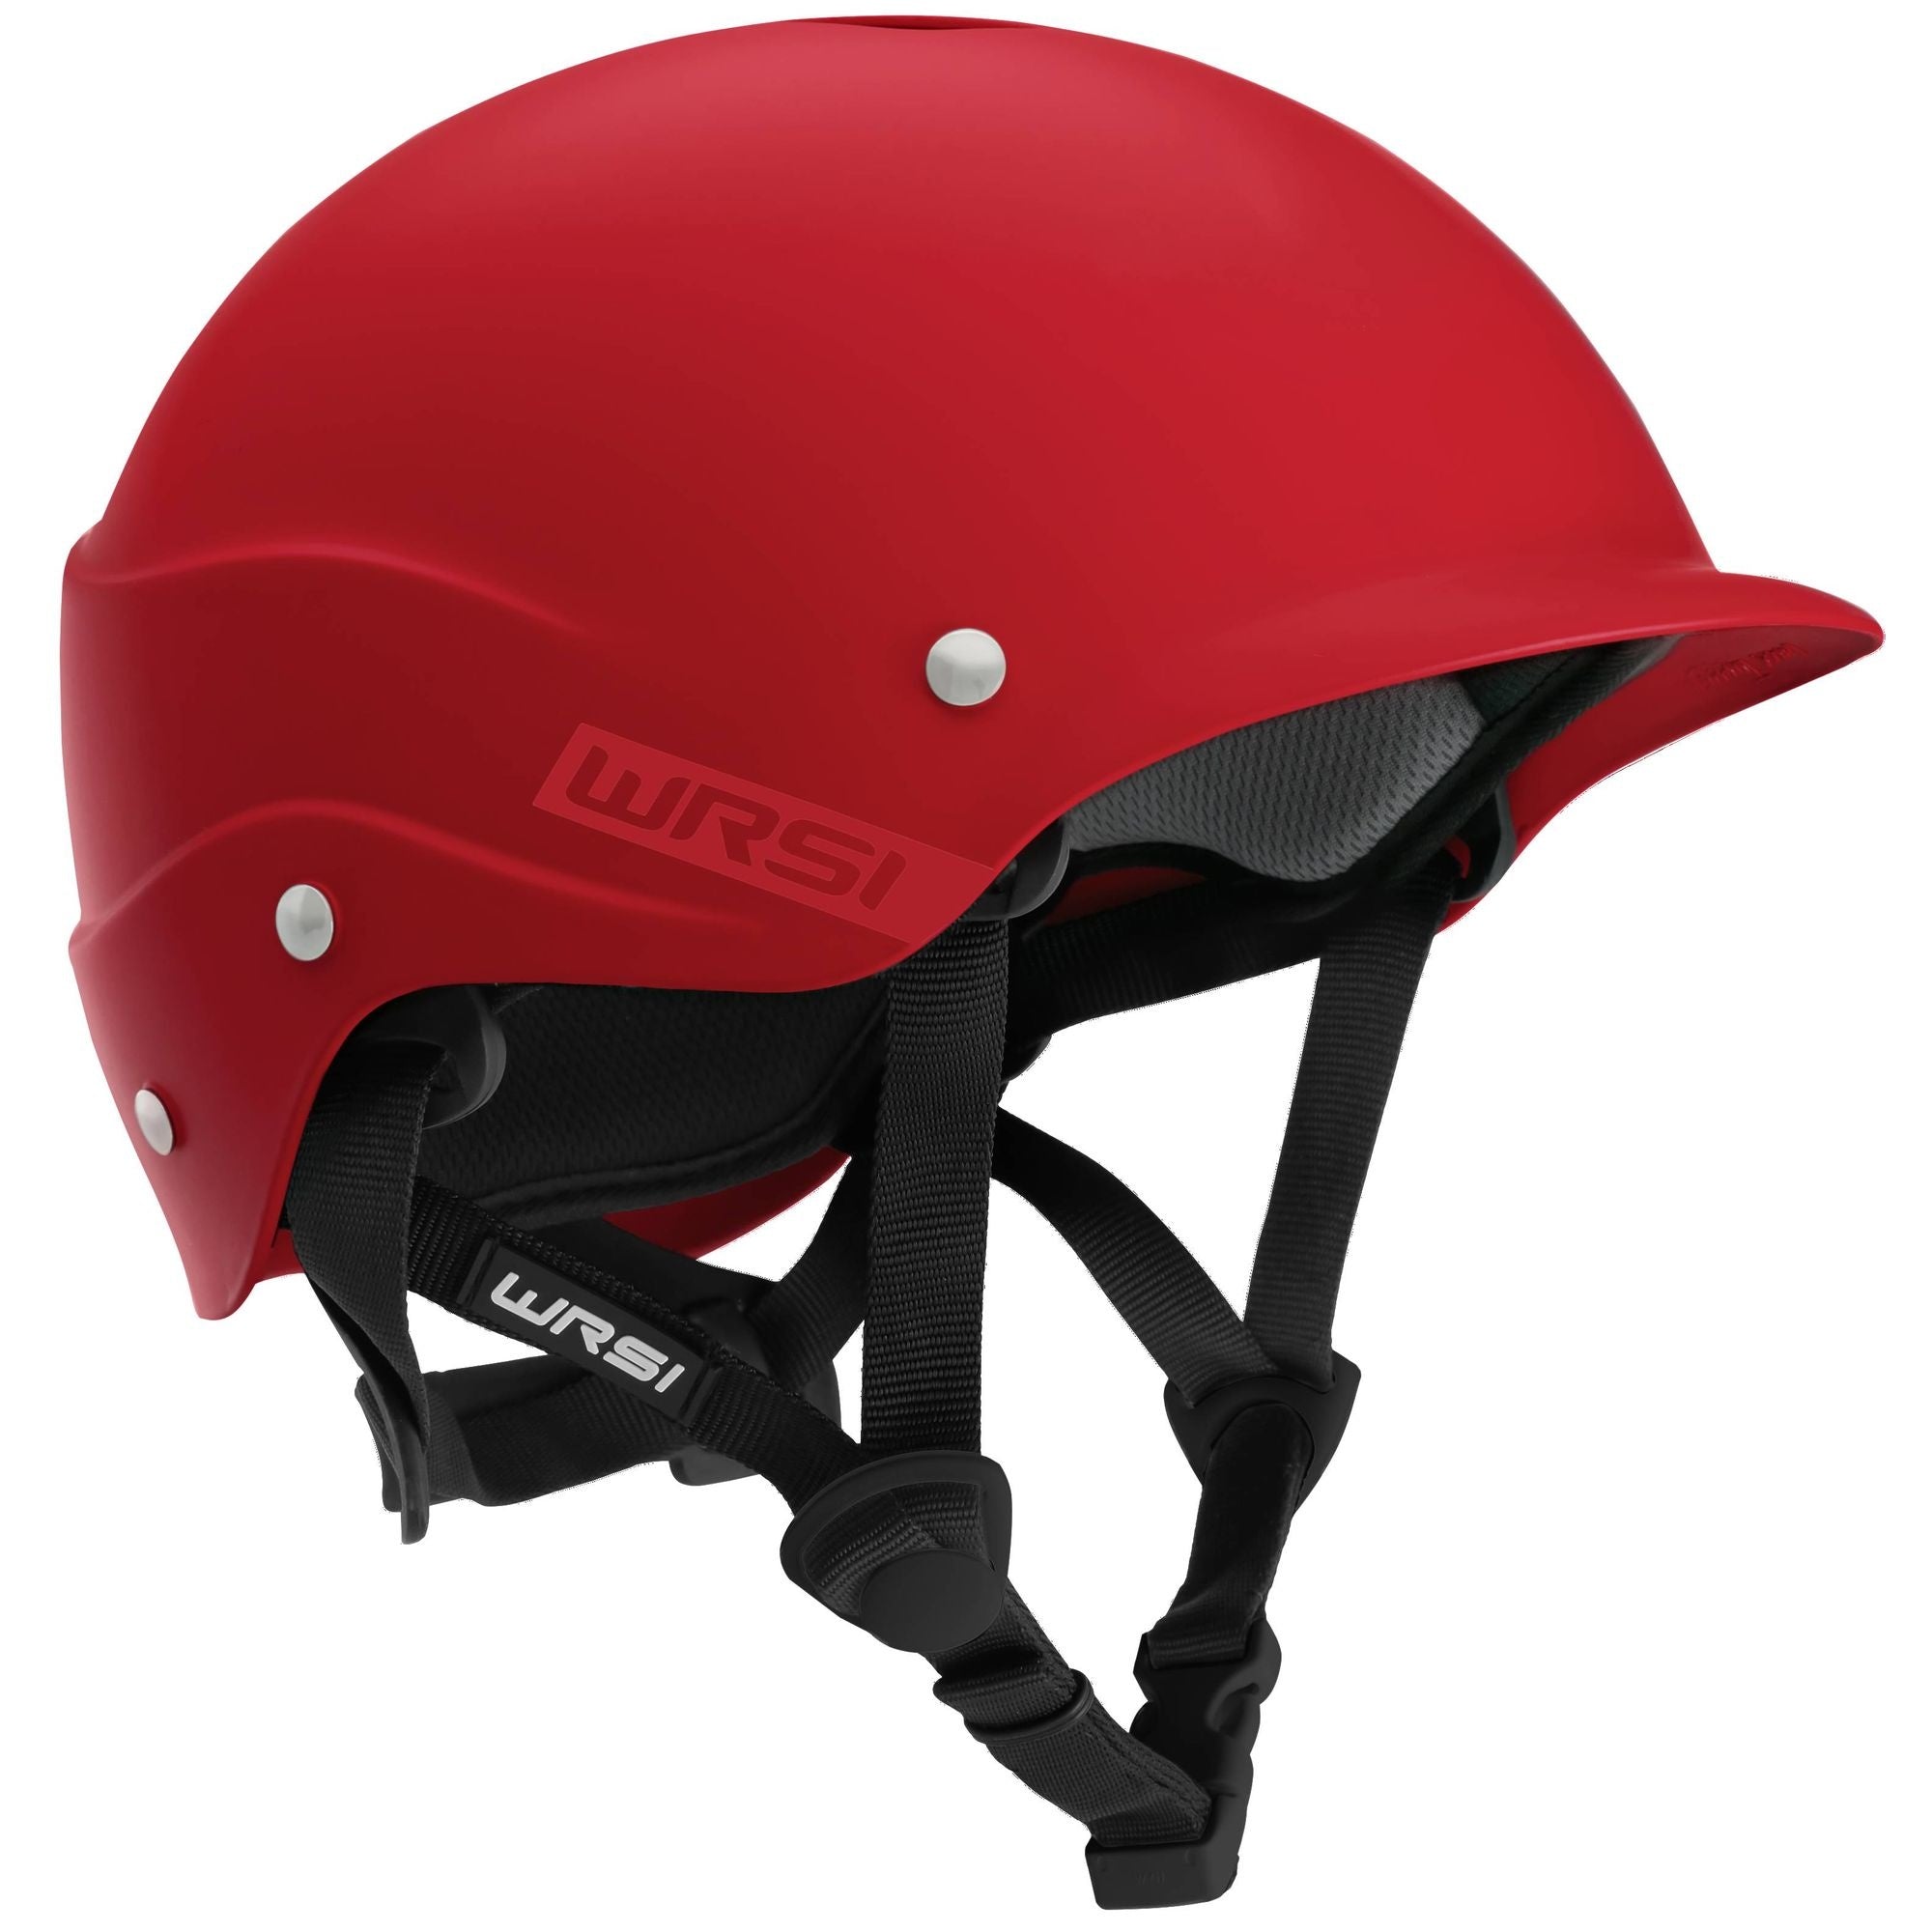 WRSI - Current - Helmet